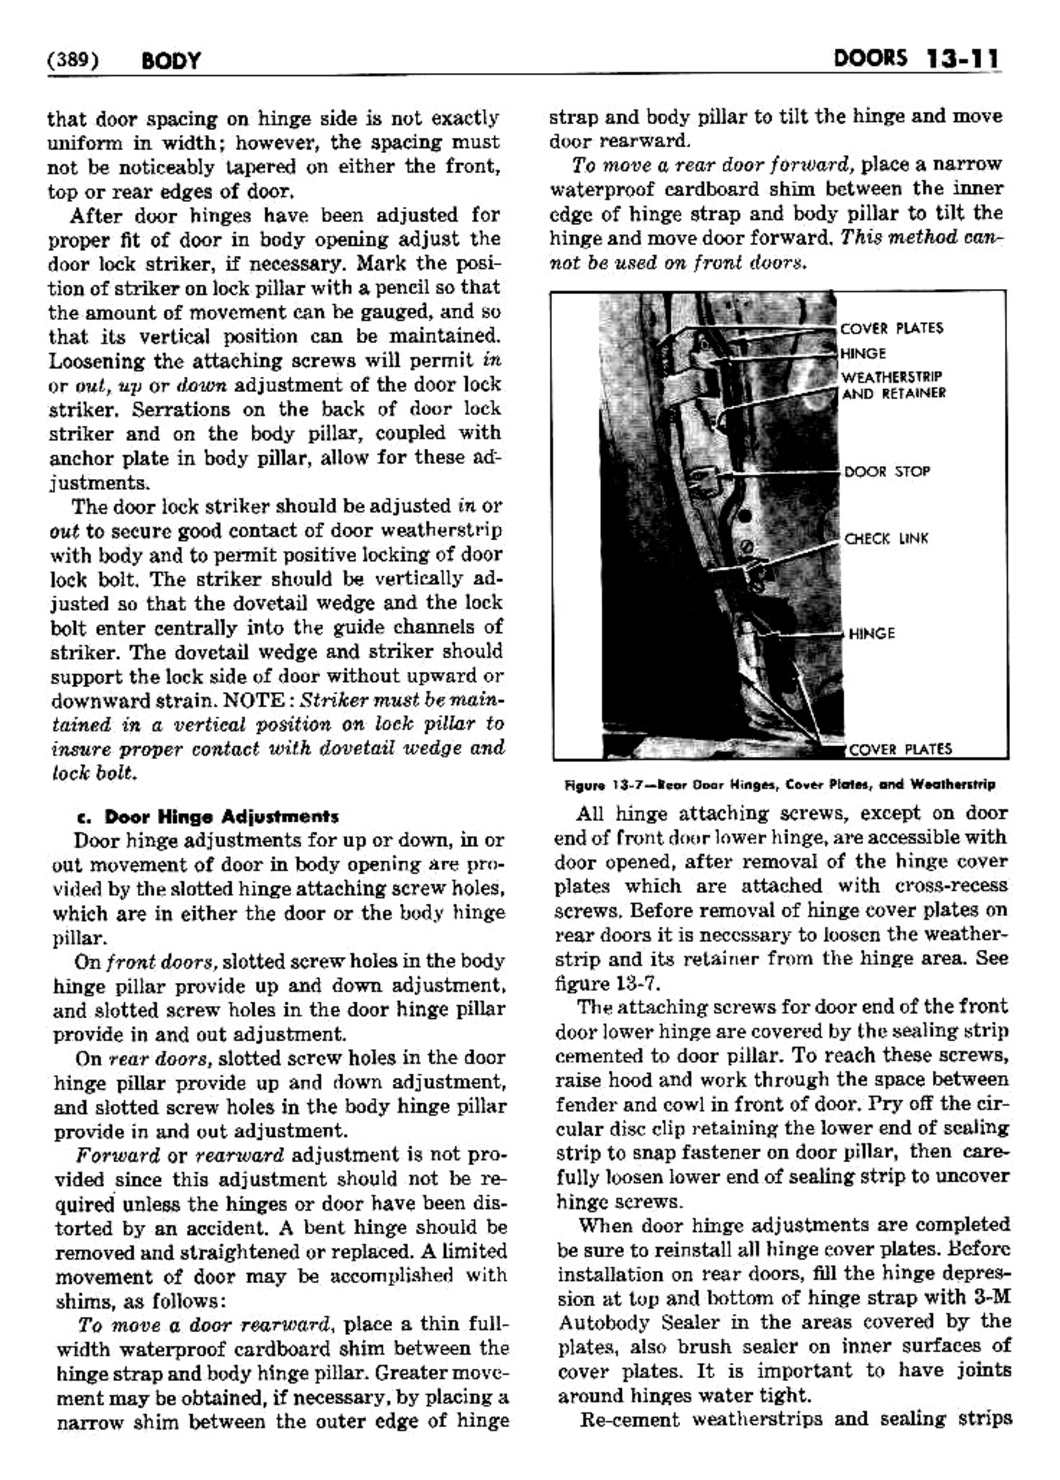 n_14 1950 Buick Shop Manual - Body-011-011.jpg